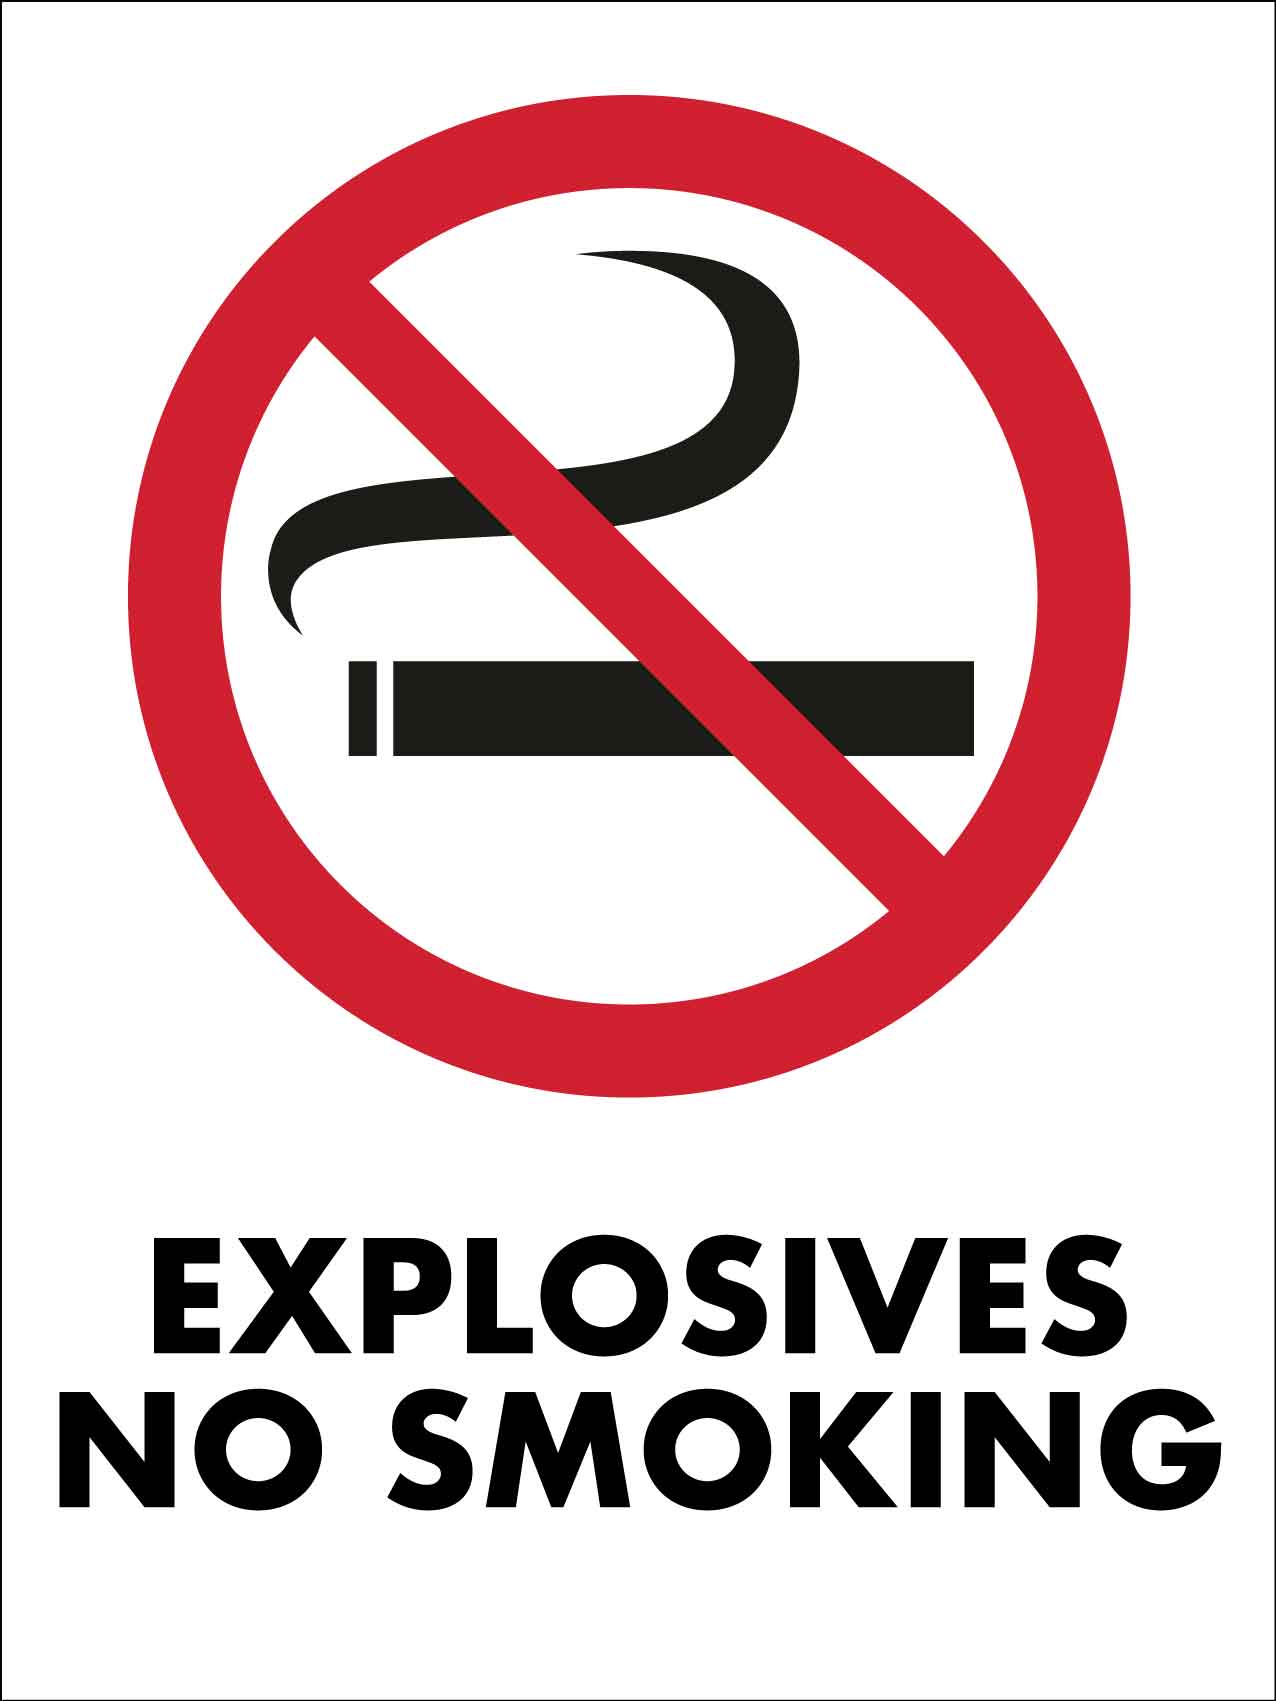 No Smoking Explosives Sign